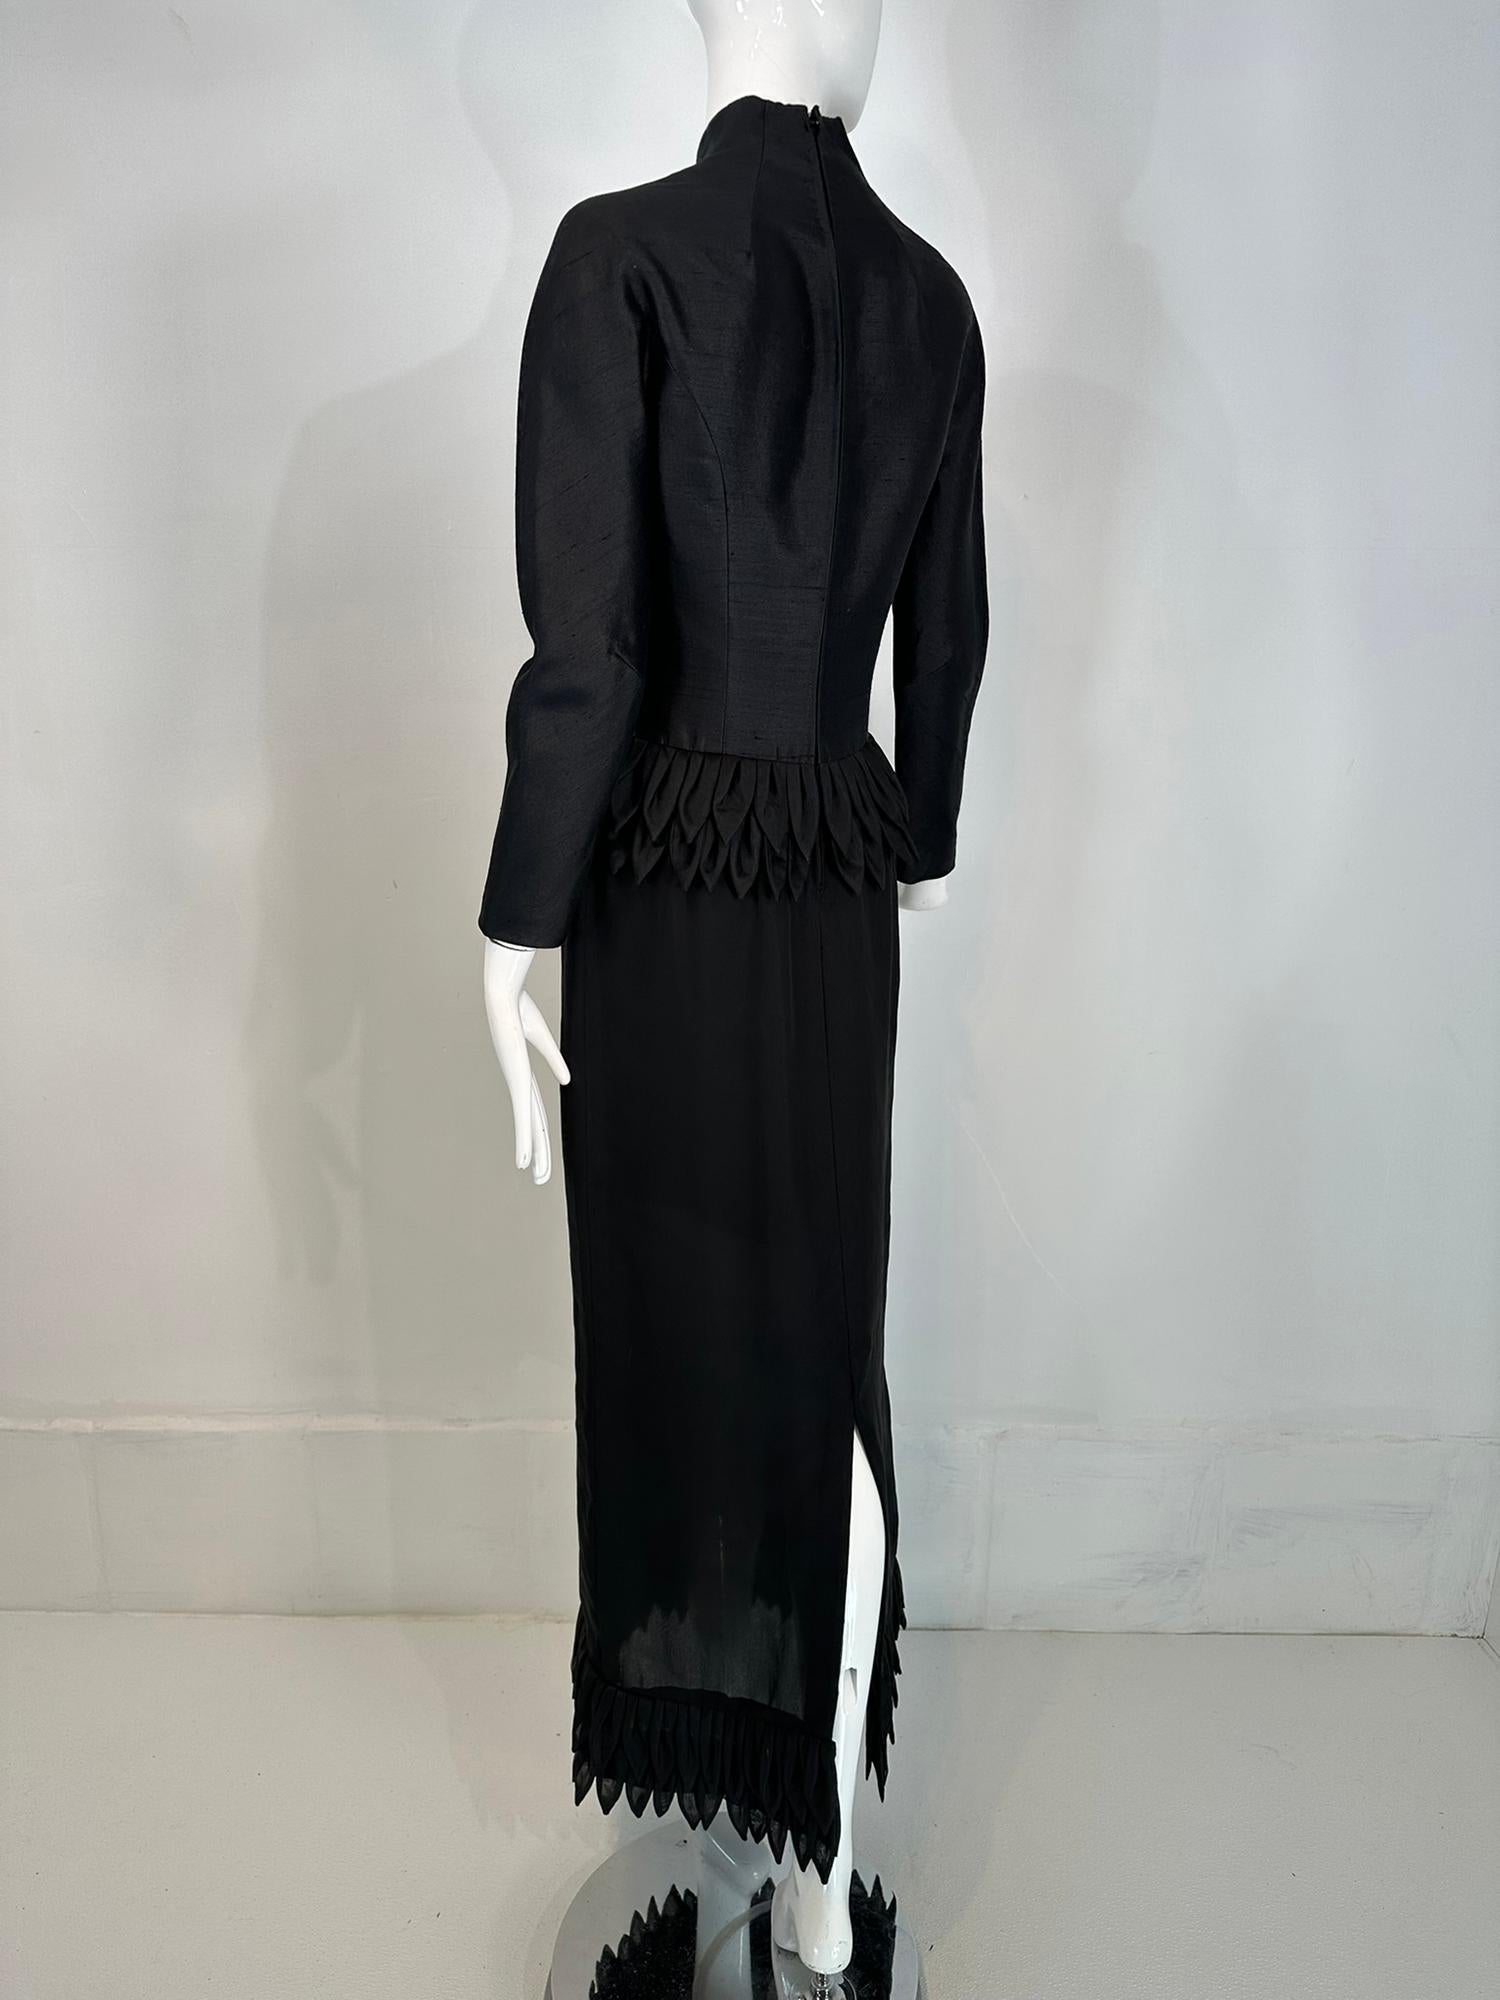 Vinchi Demi Couture Black Silk Hand Rolled Petal Evening Dress 1960s Hong Kong For Sale 3